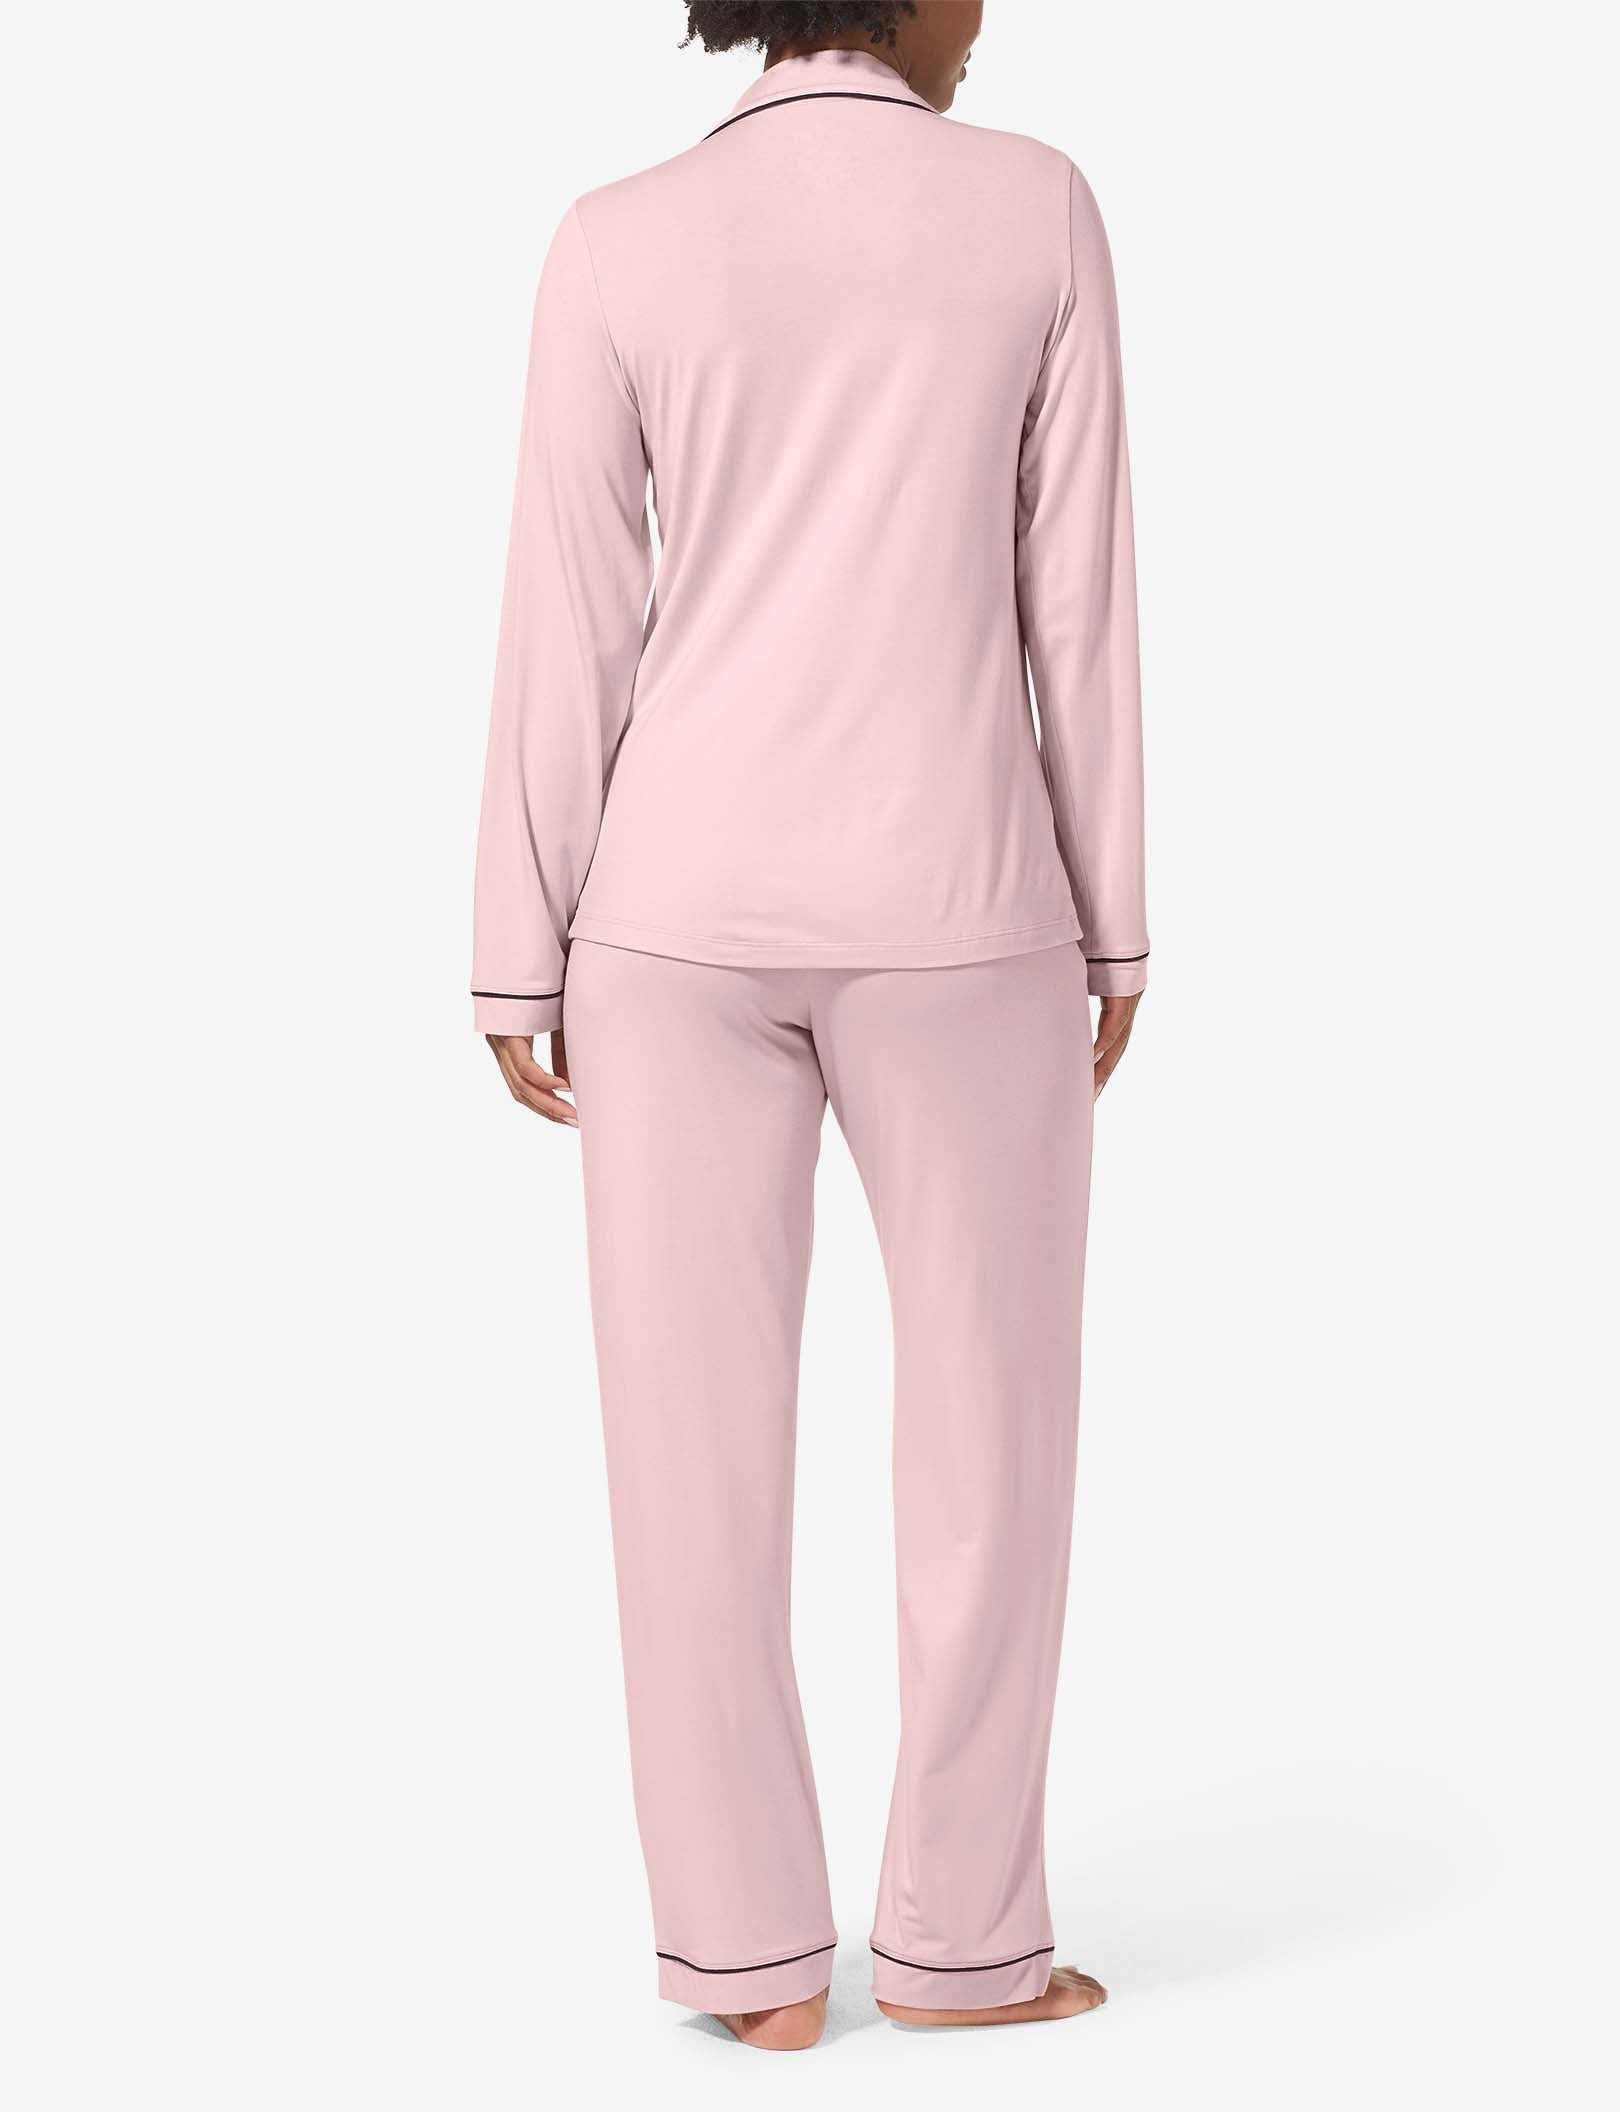 Women's Long Sleeve Top & Pant Pajama Set, Peachskin